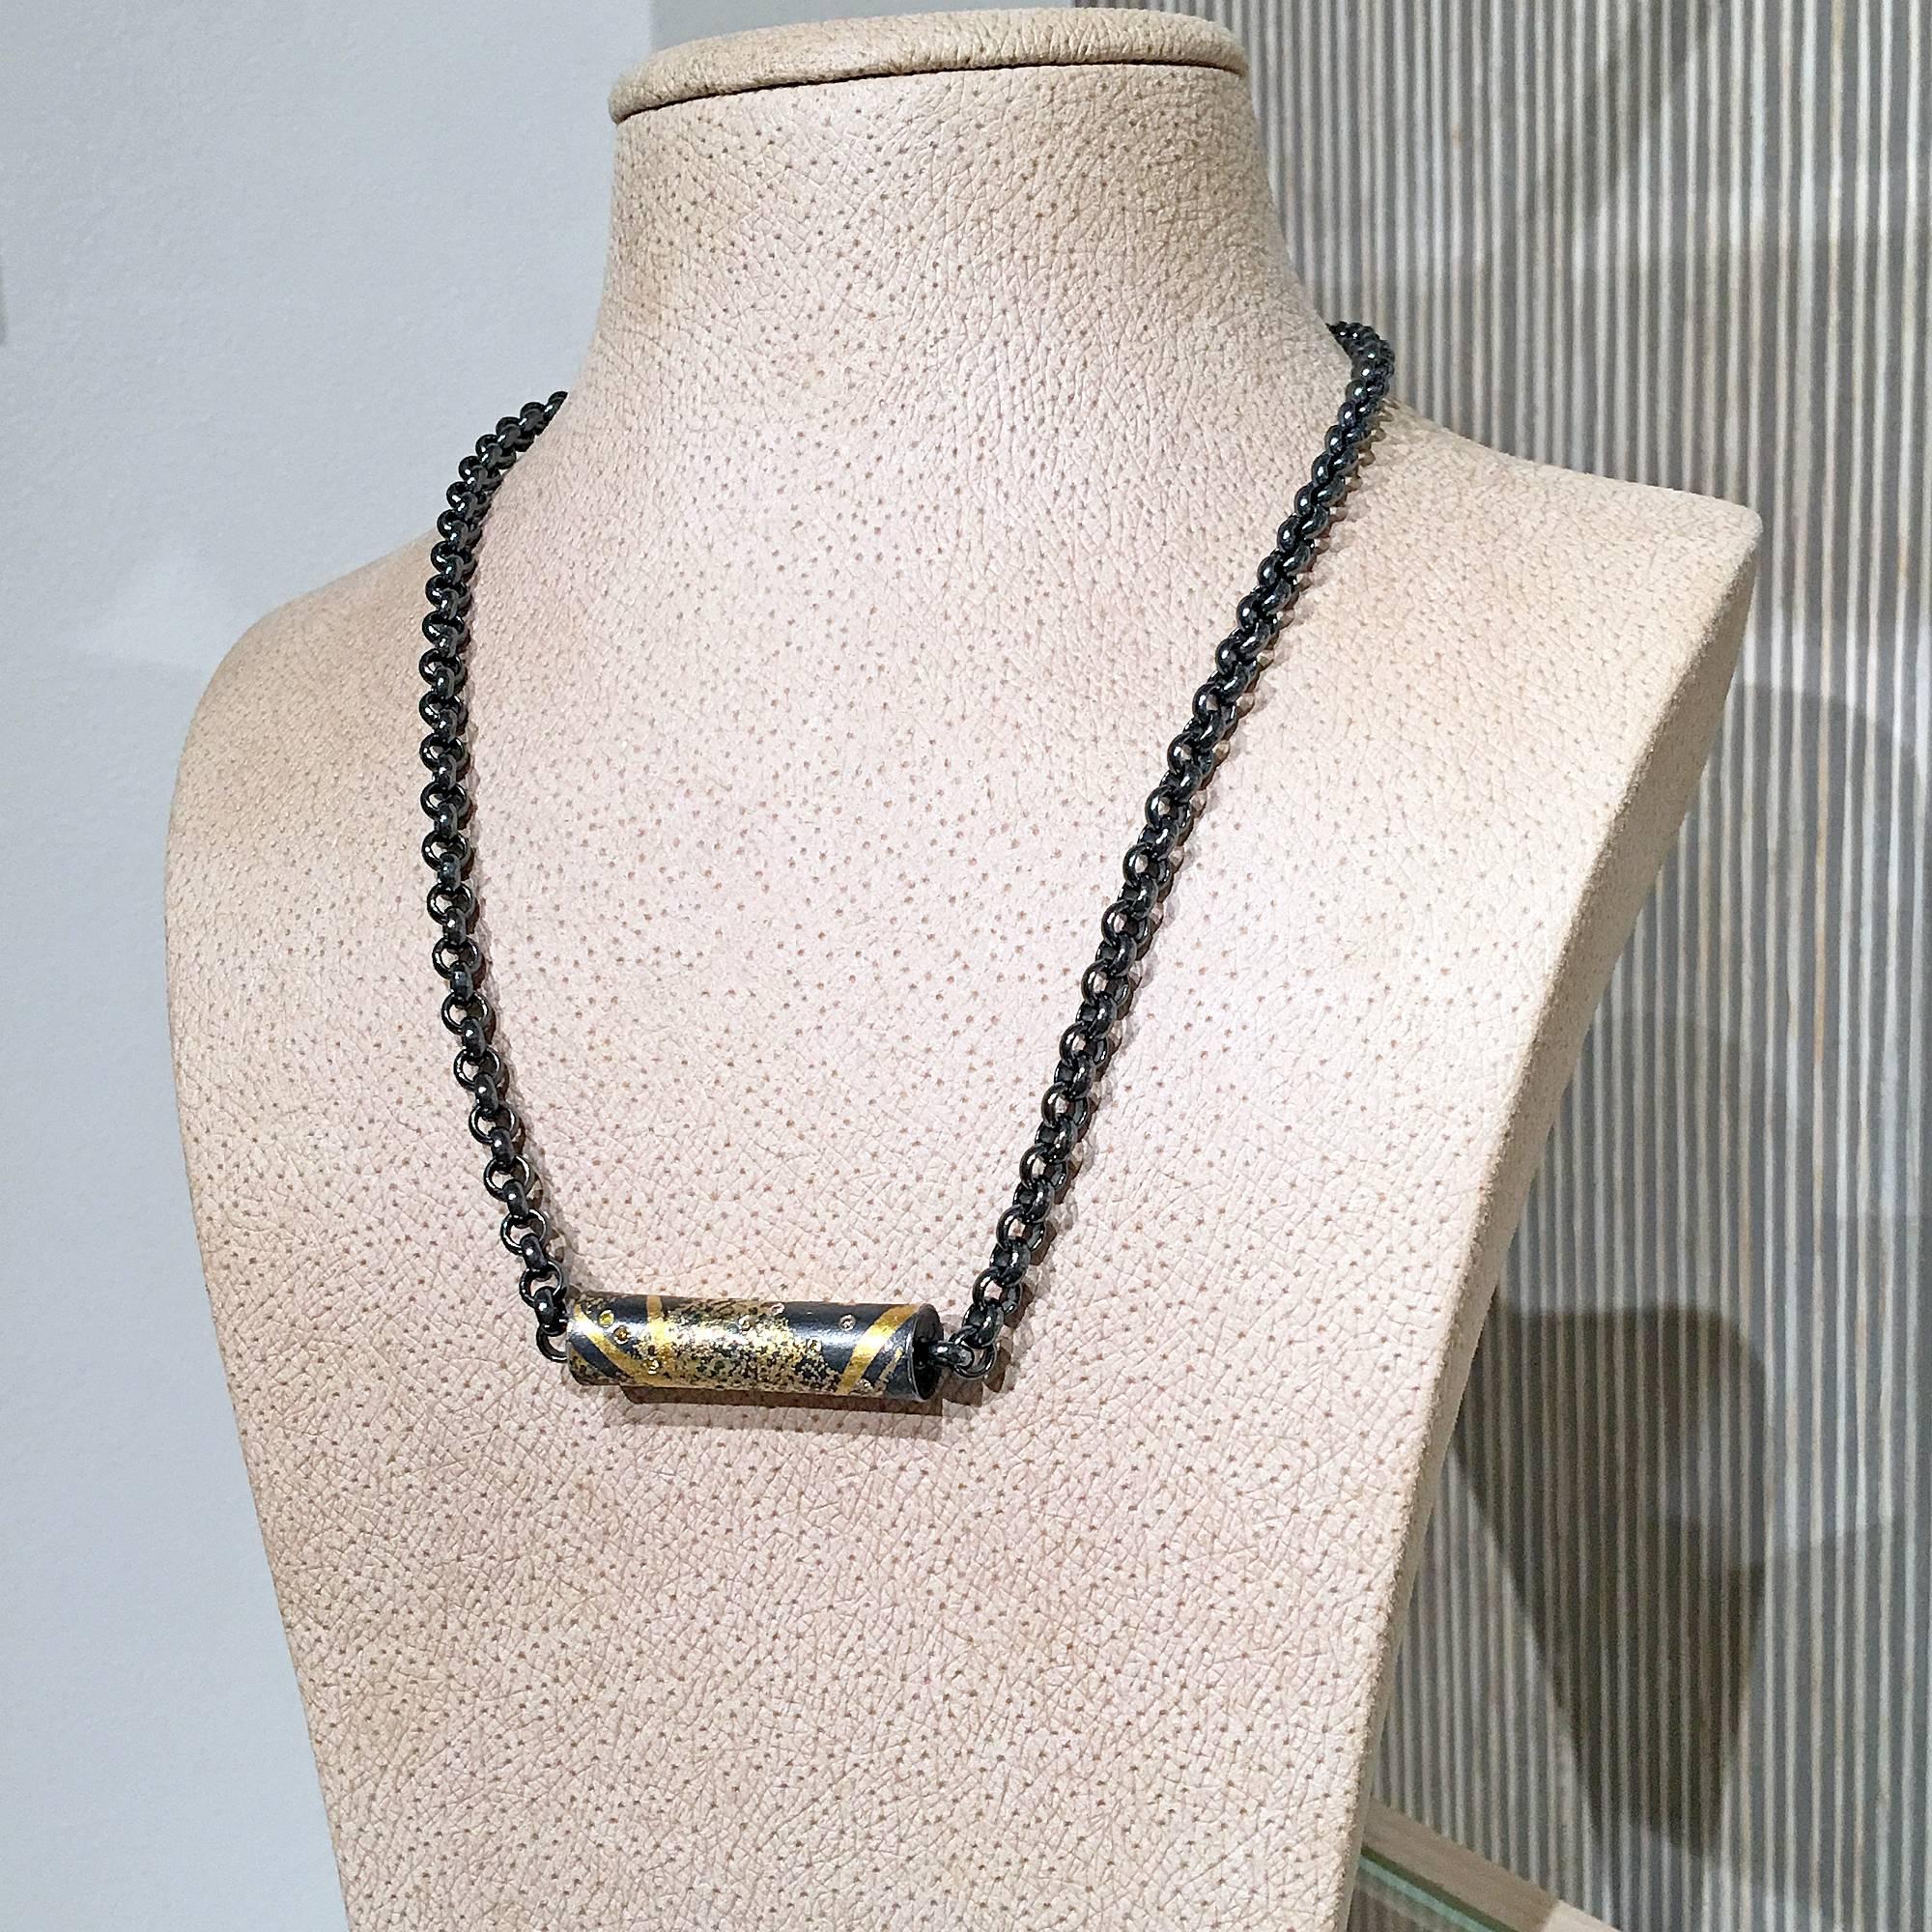 Artist Zobel Natural Color Diamond Hidden Clasp Gold Black Silver Chain Barrel Necklace